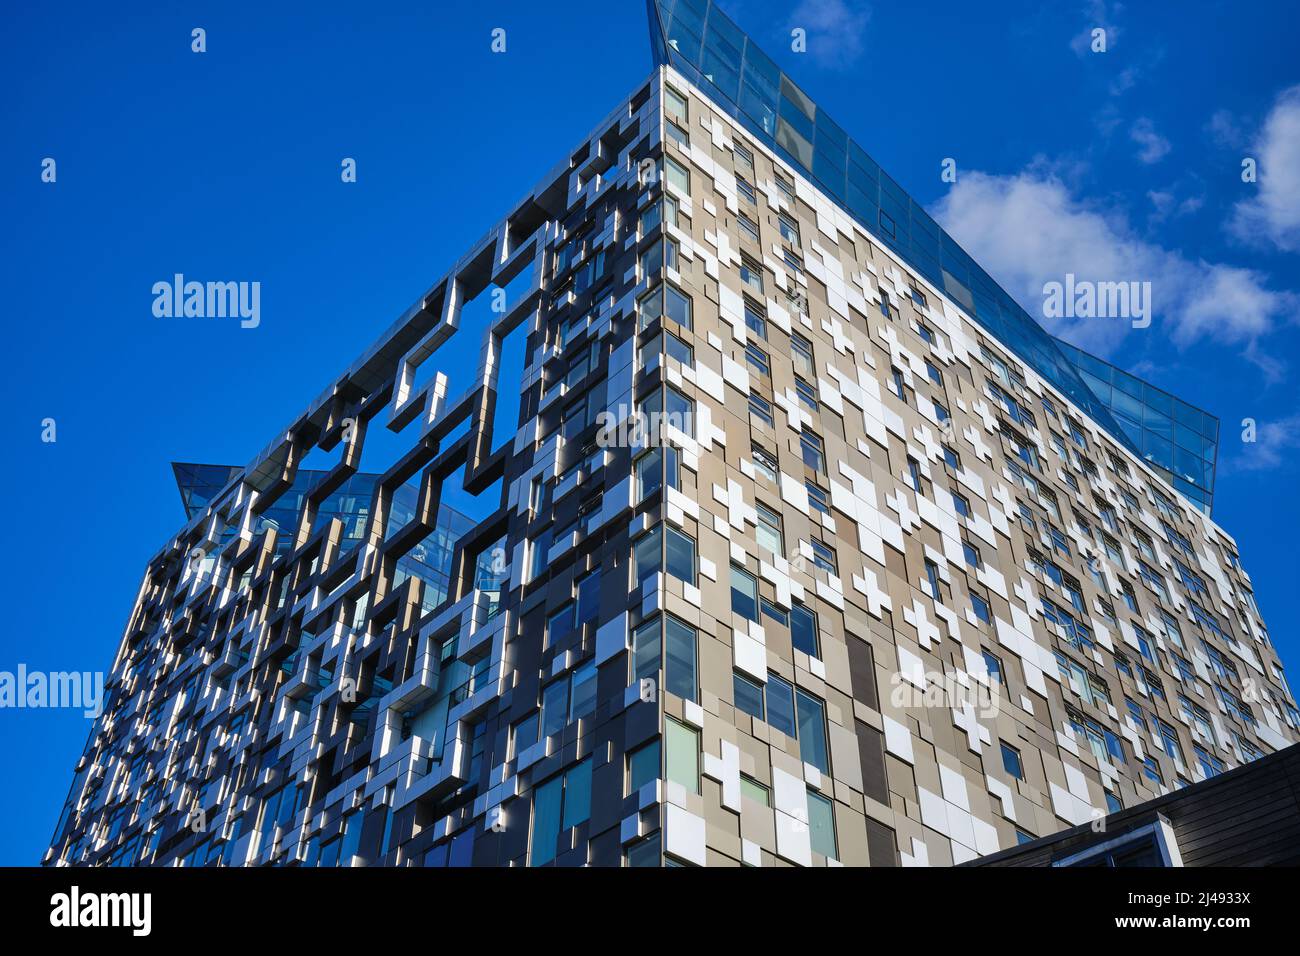 The Cube, a landmark building in central Birmingham, UK Stock Photo